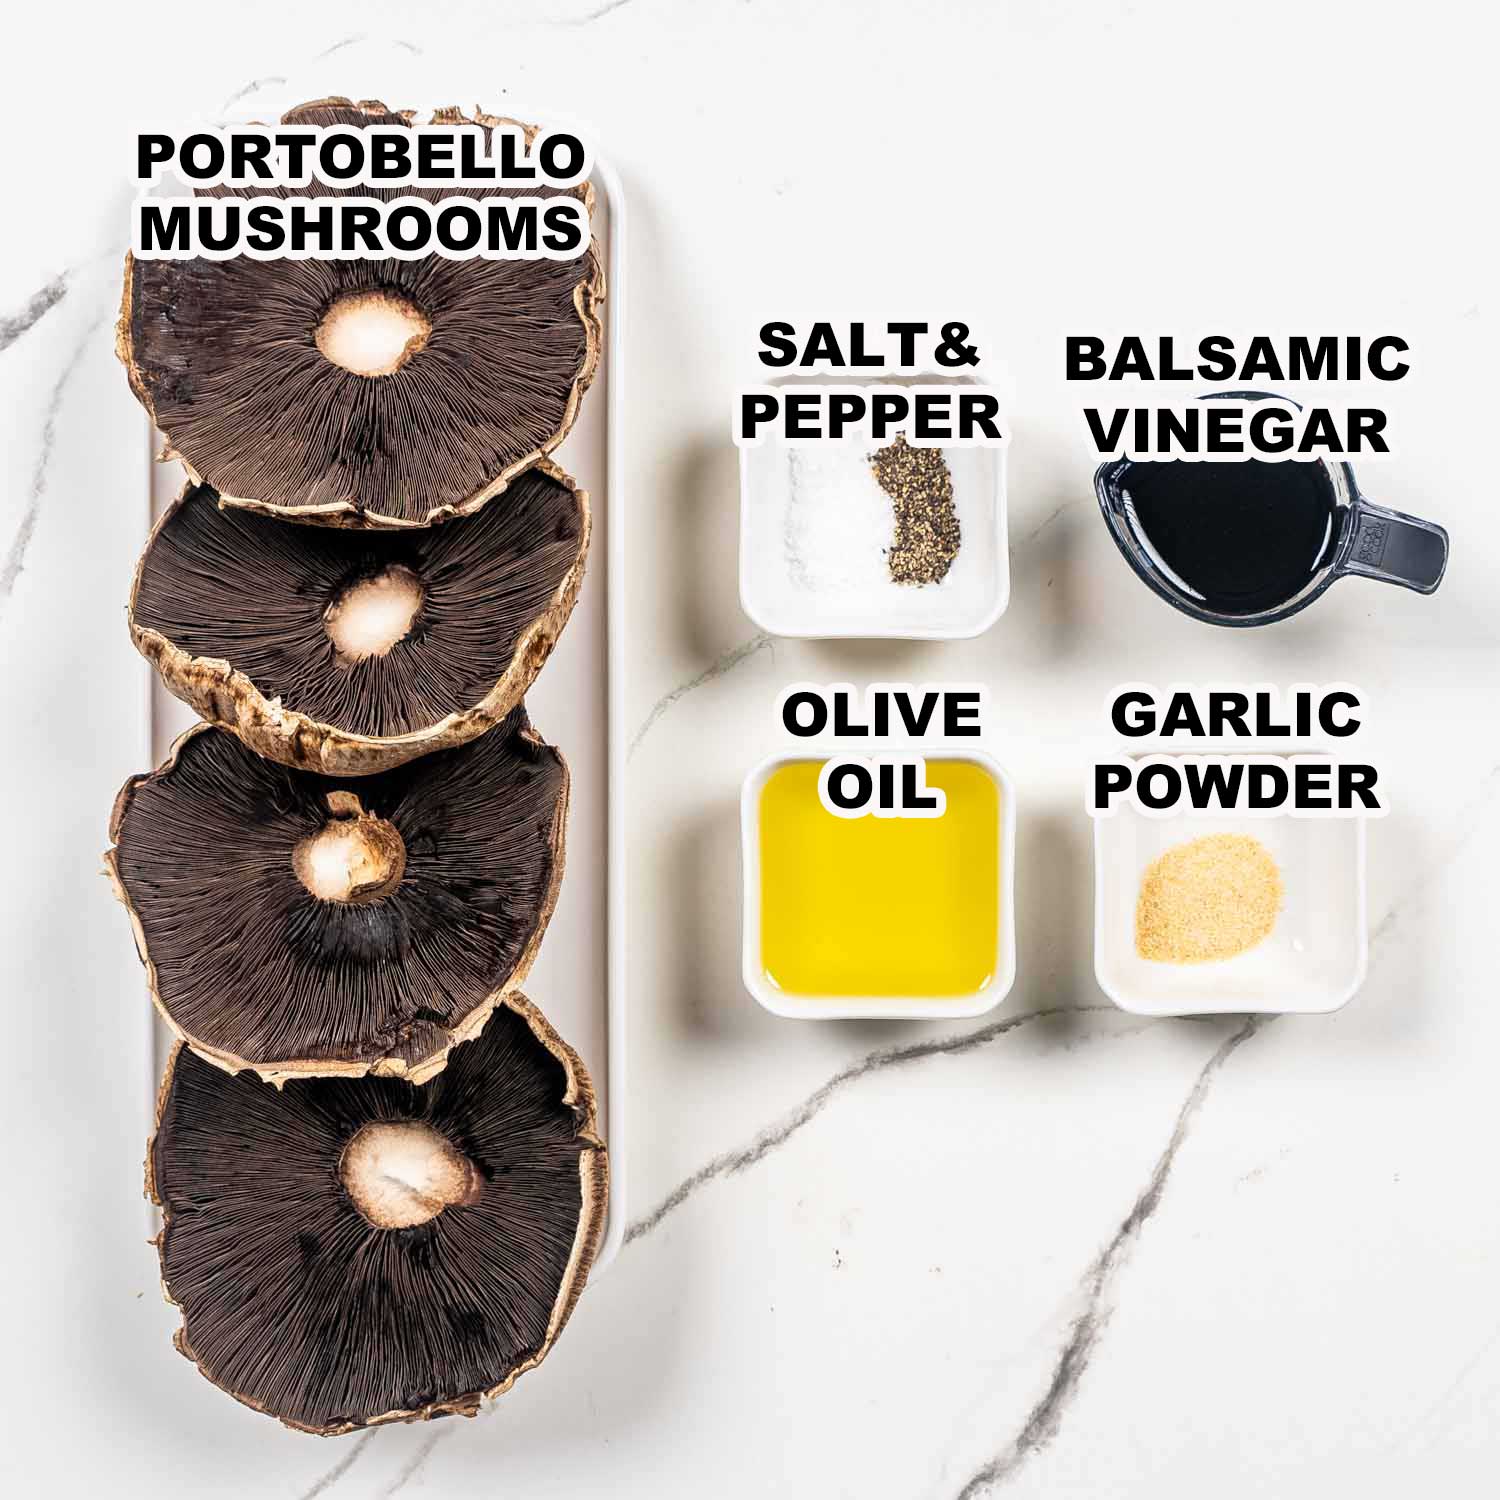 ingredients needed to make grilled portobello mushrooms.